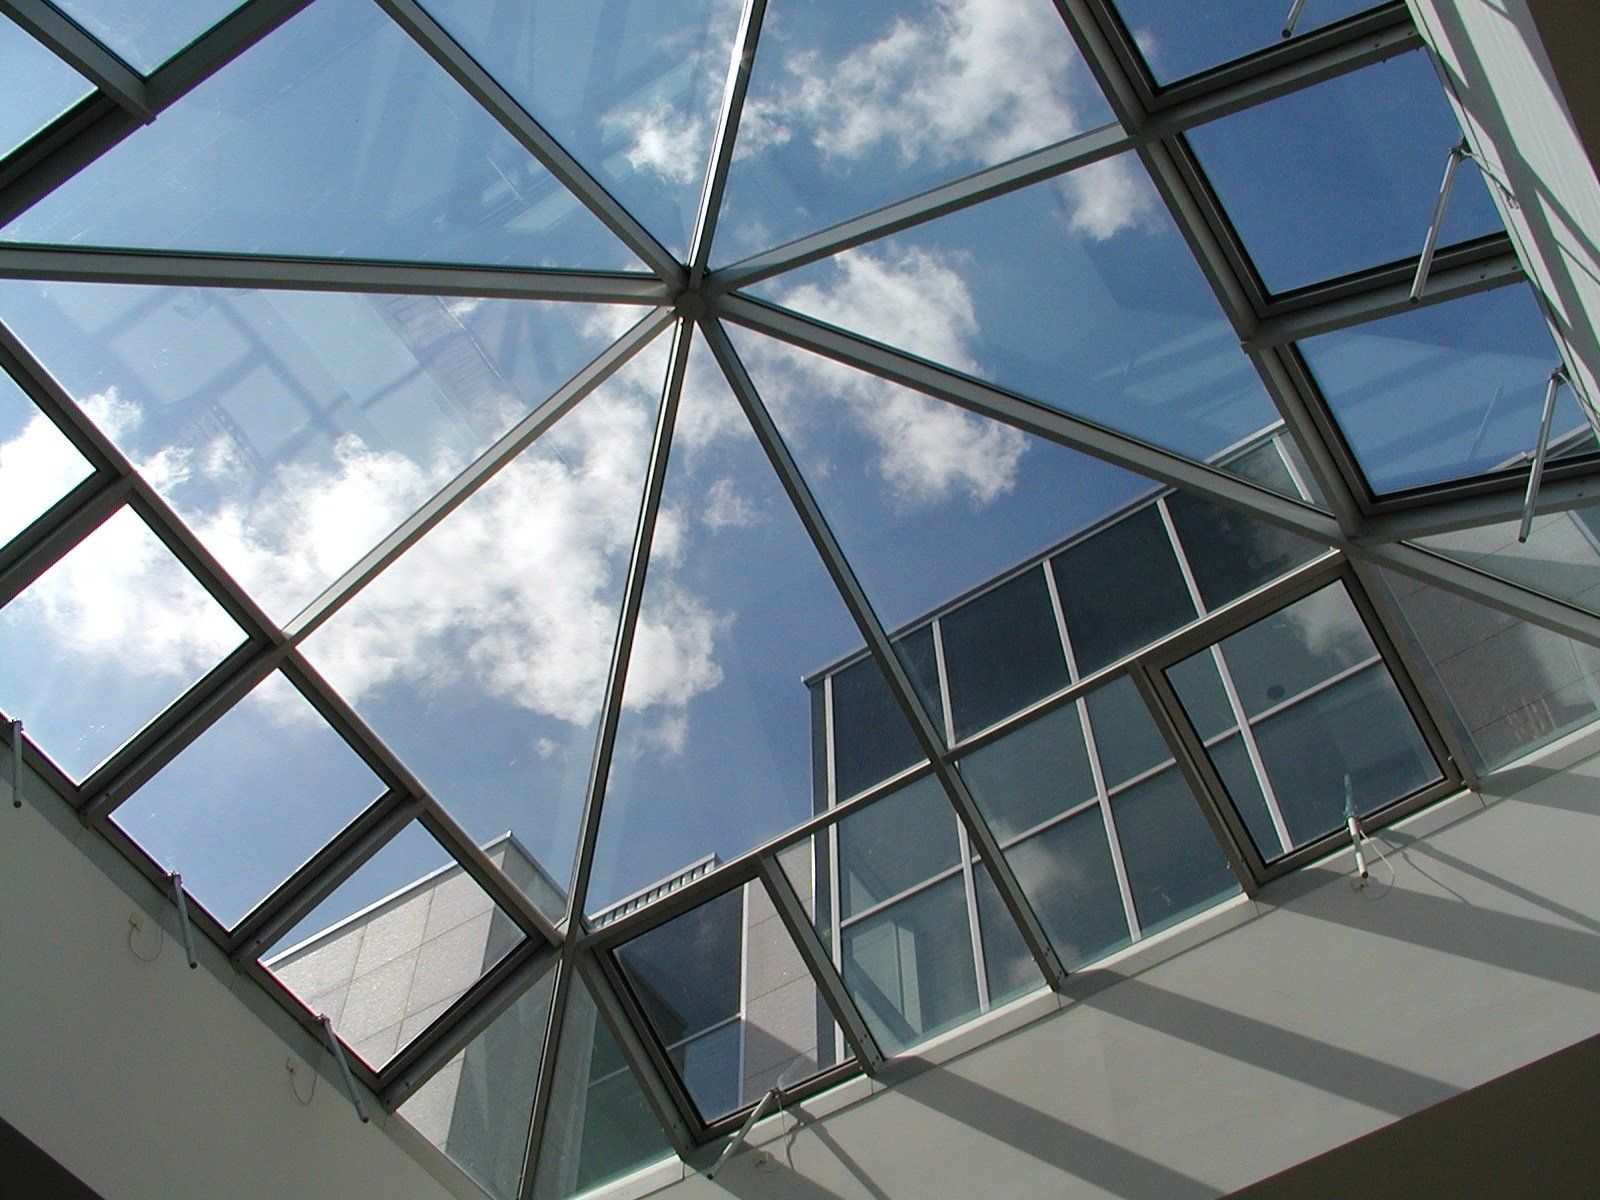 wl hall company daylighting with translucent panels and skylights kalwall 7